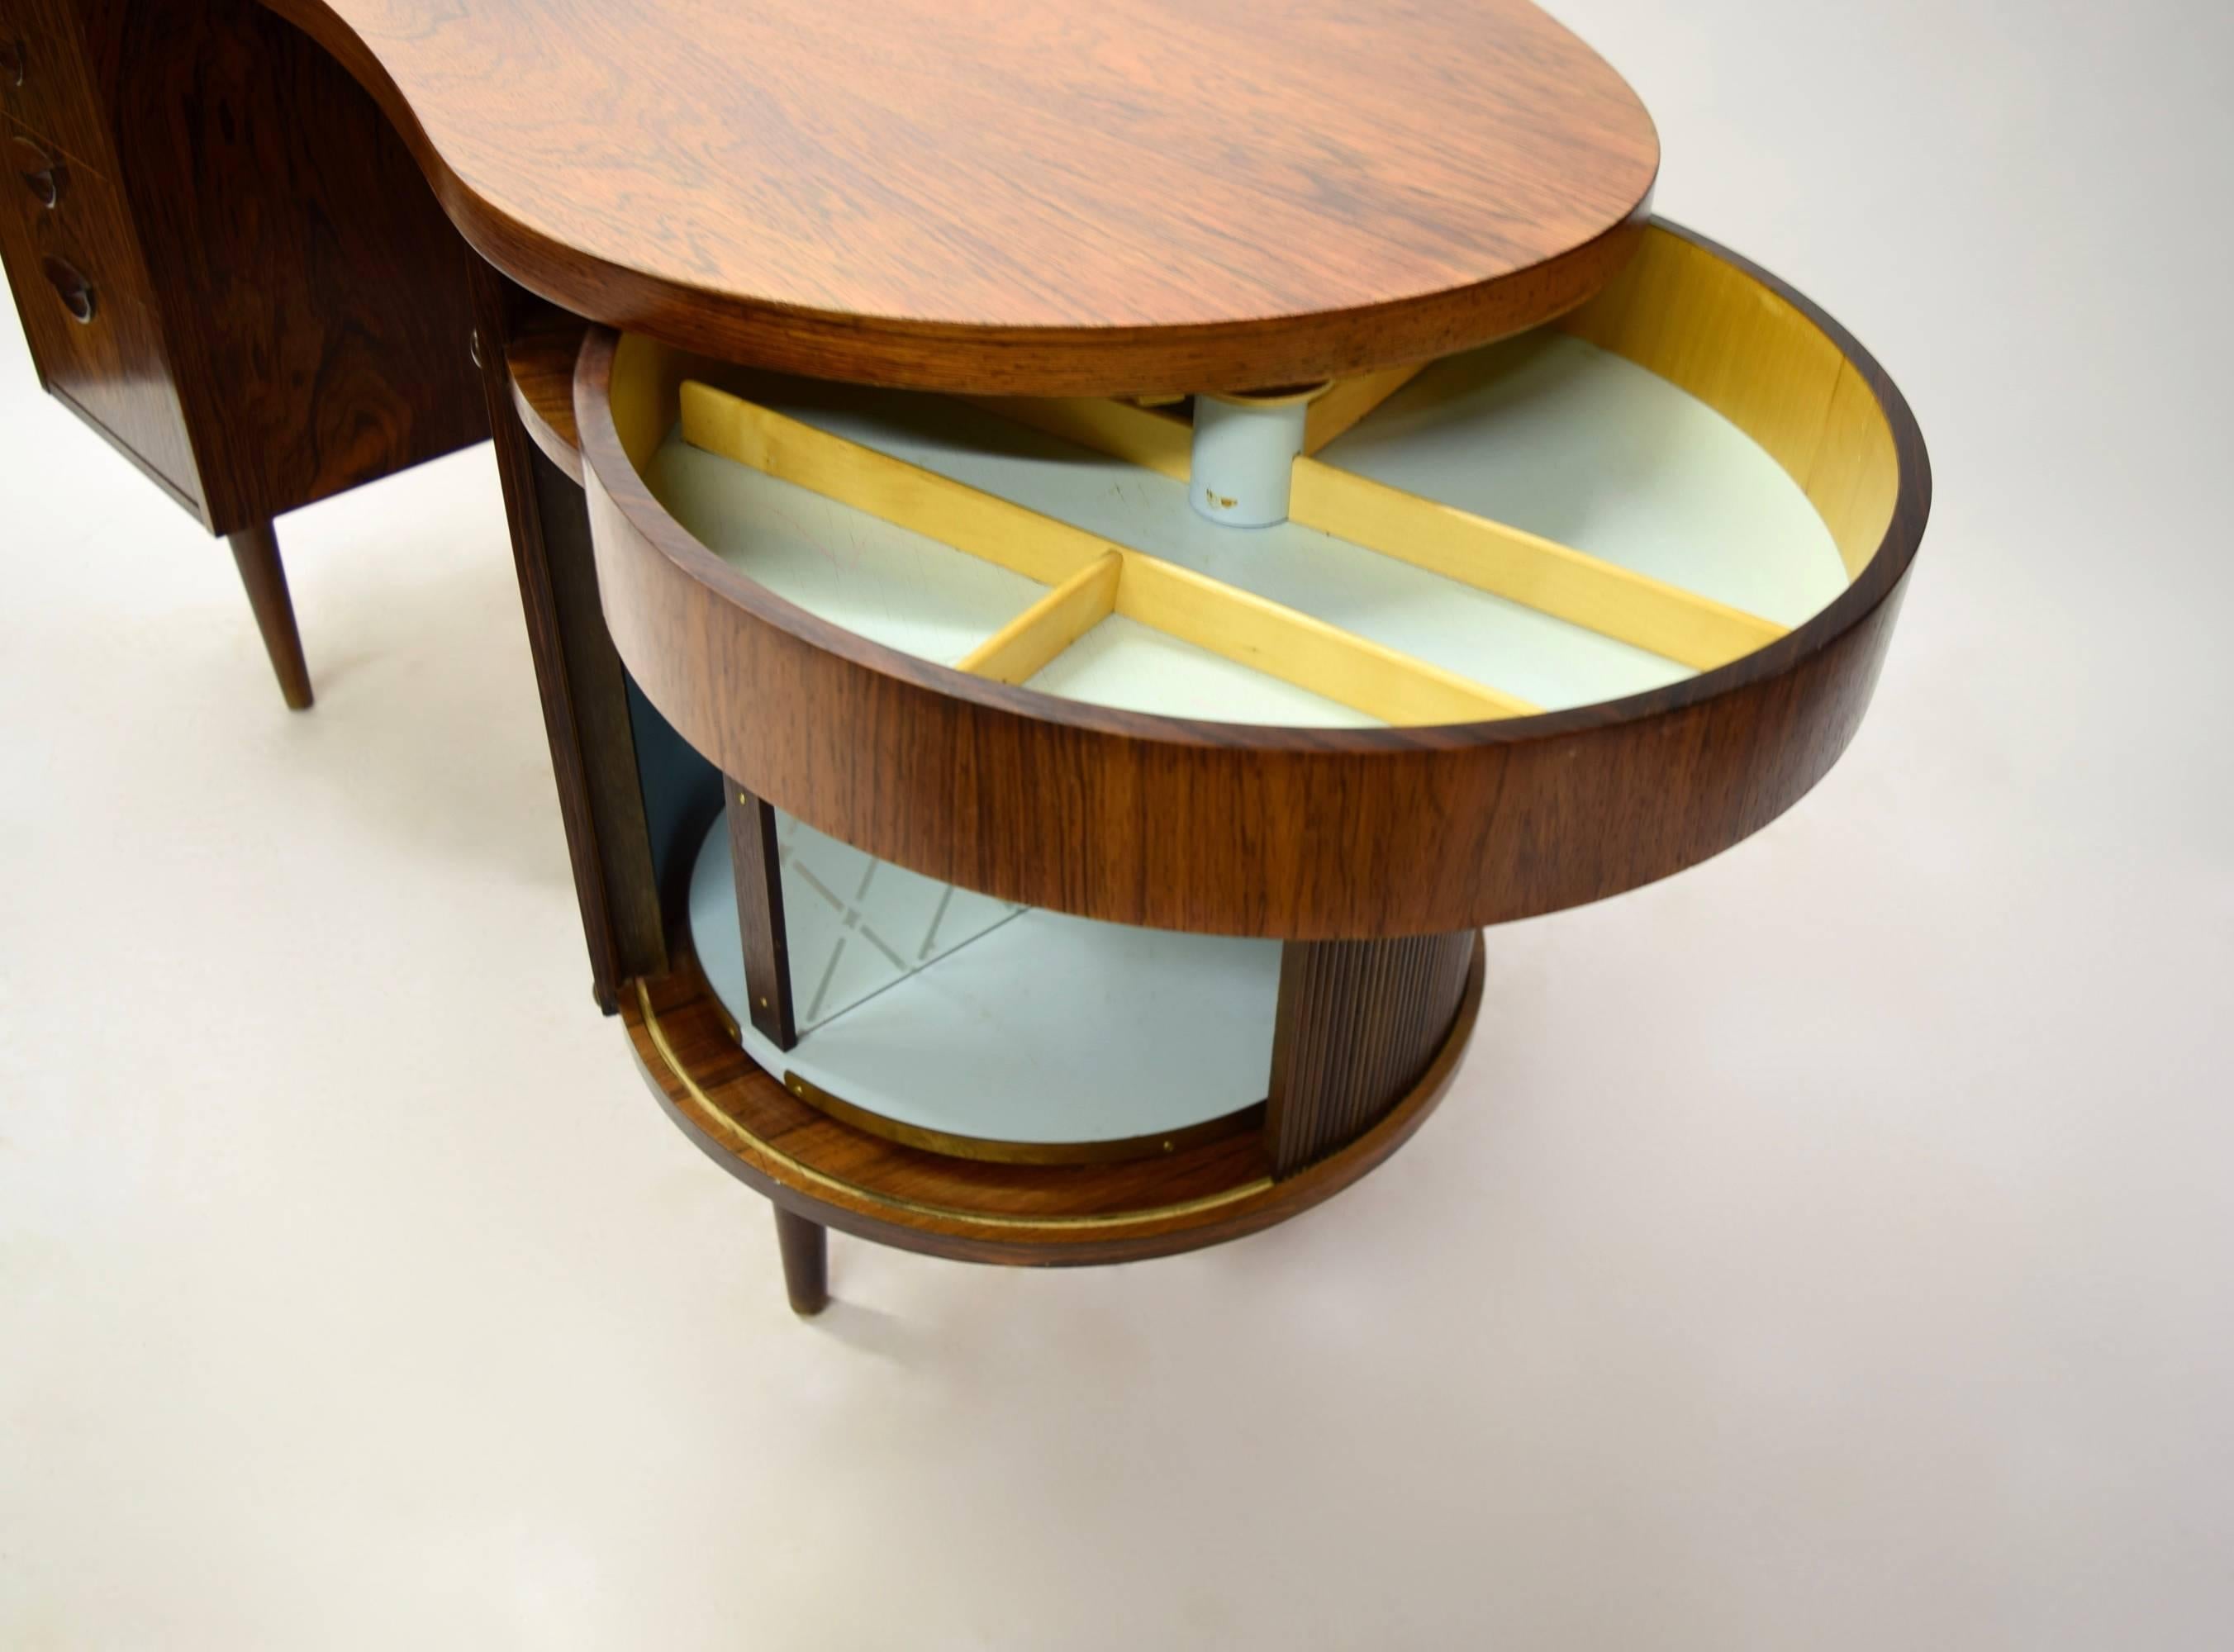 Mid-Century Modern Rosewood Desk by Kai Kristiansen for FM Furniture, 1956, Made in Denmark